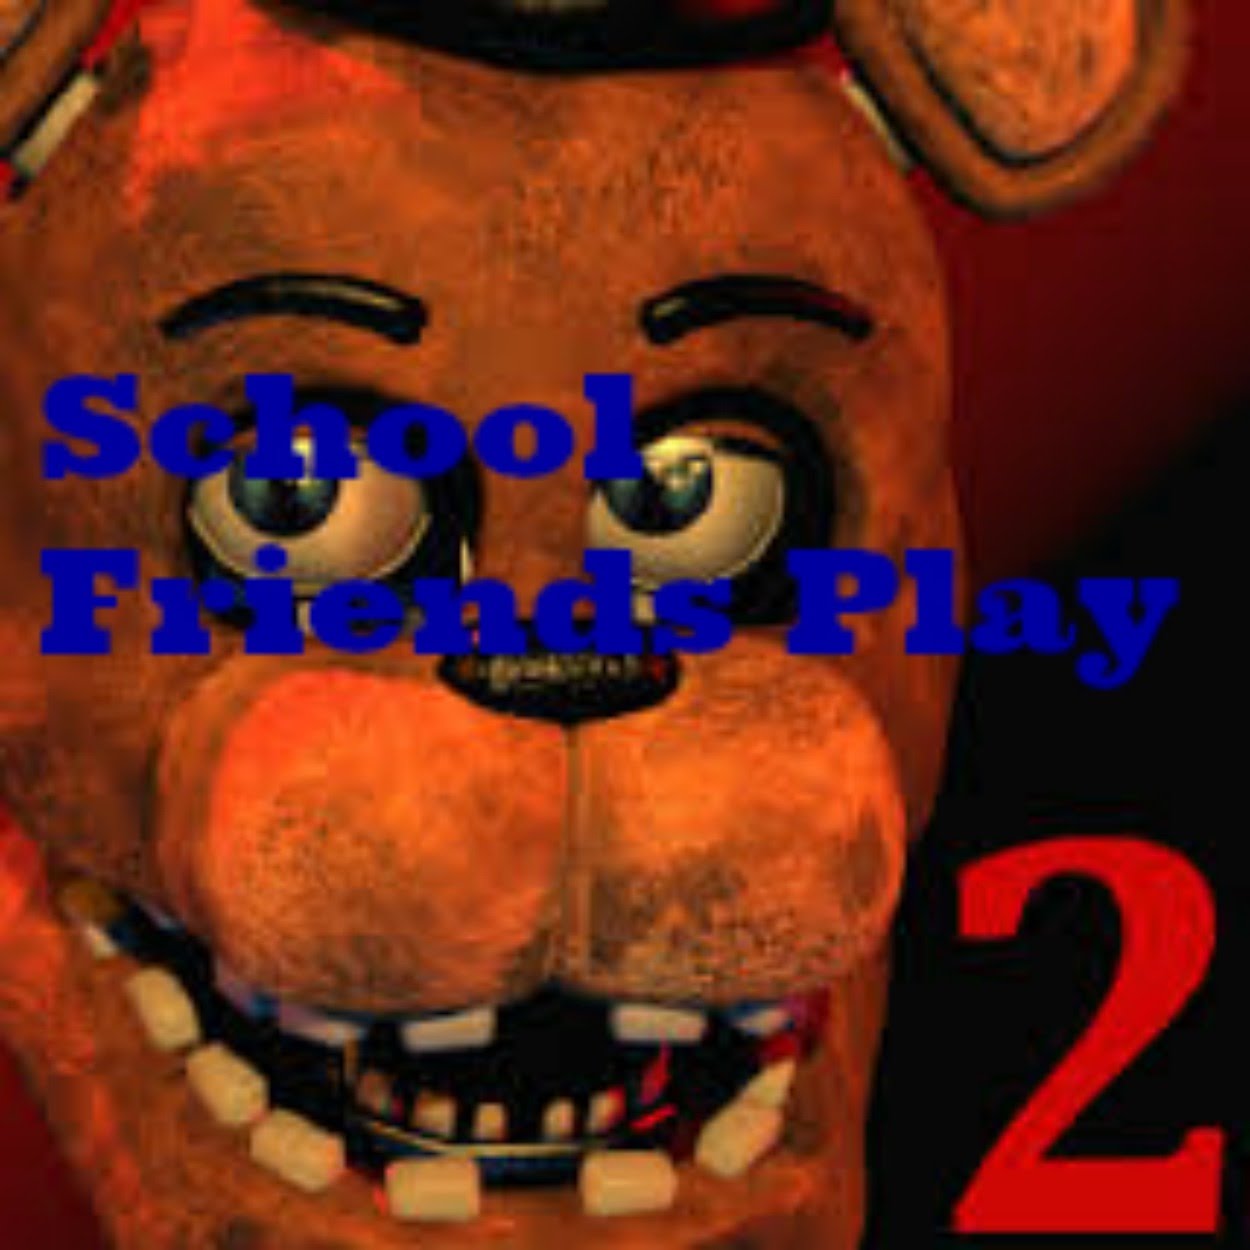 мишка фредди 2 - Five Nights at Freddy s 2